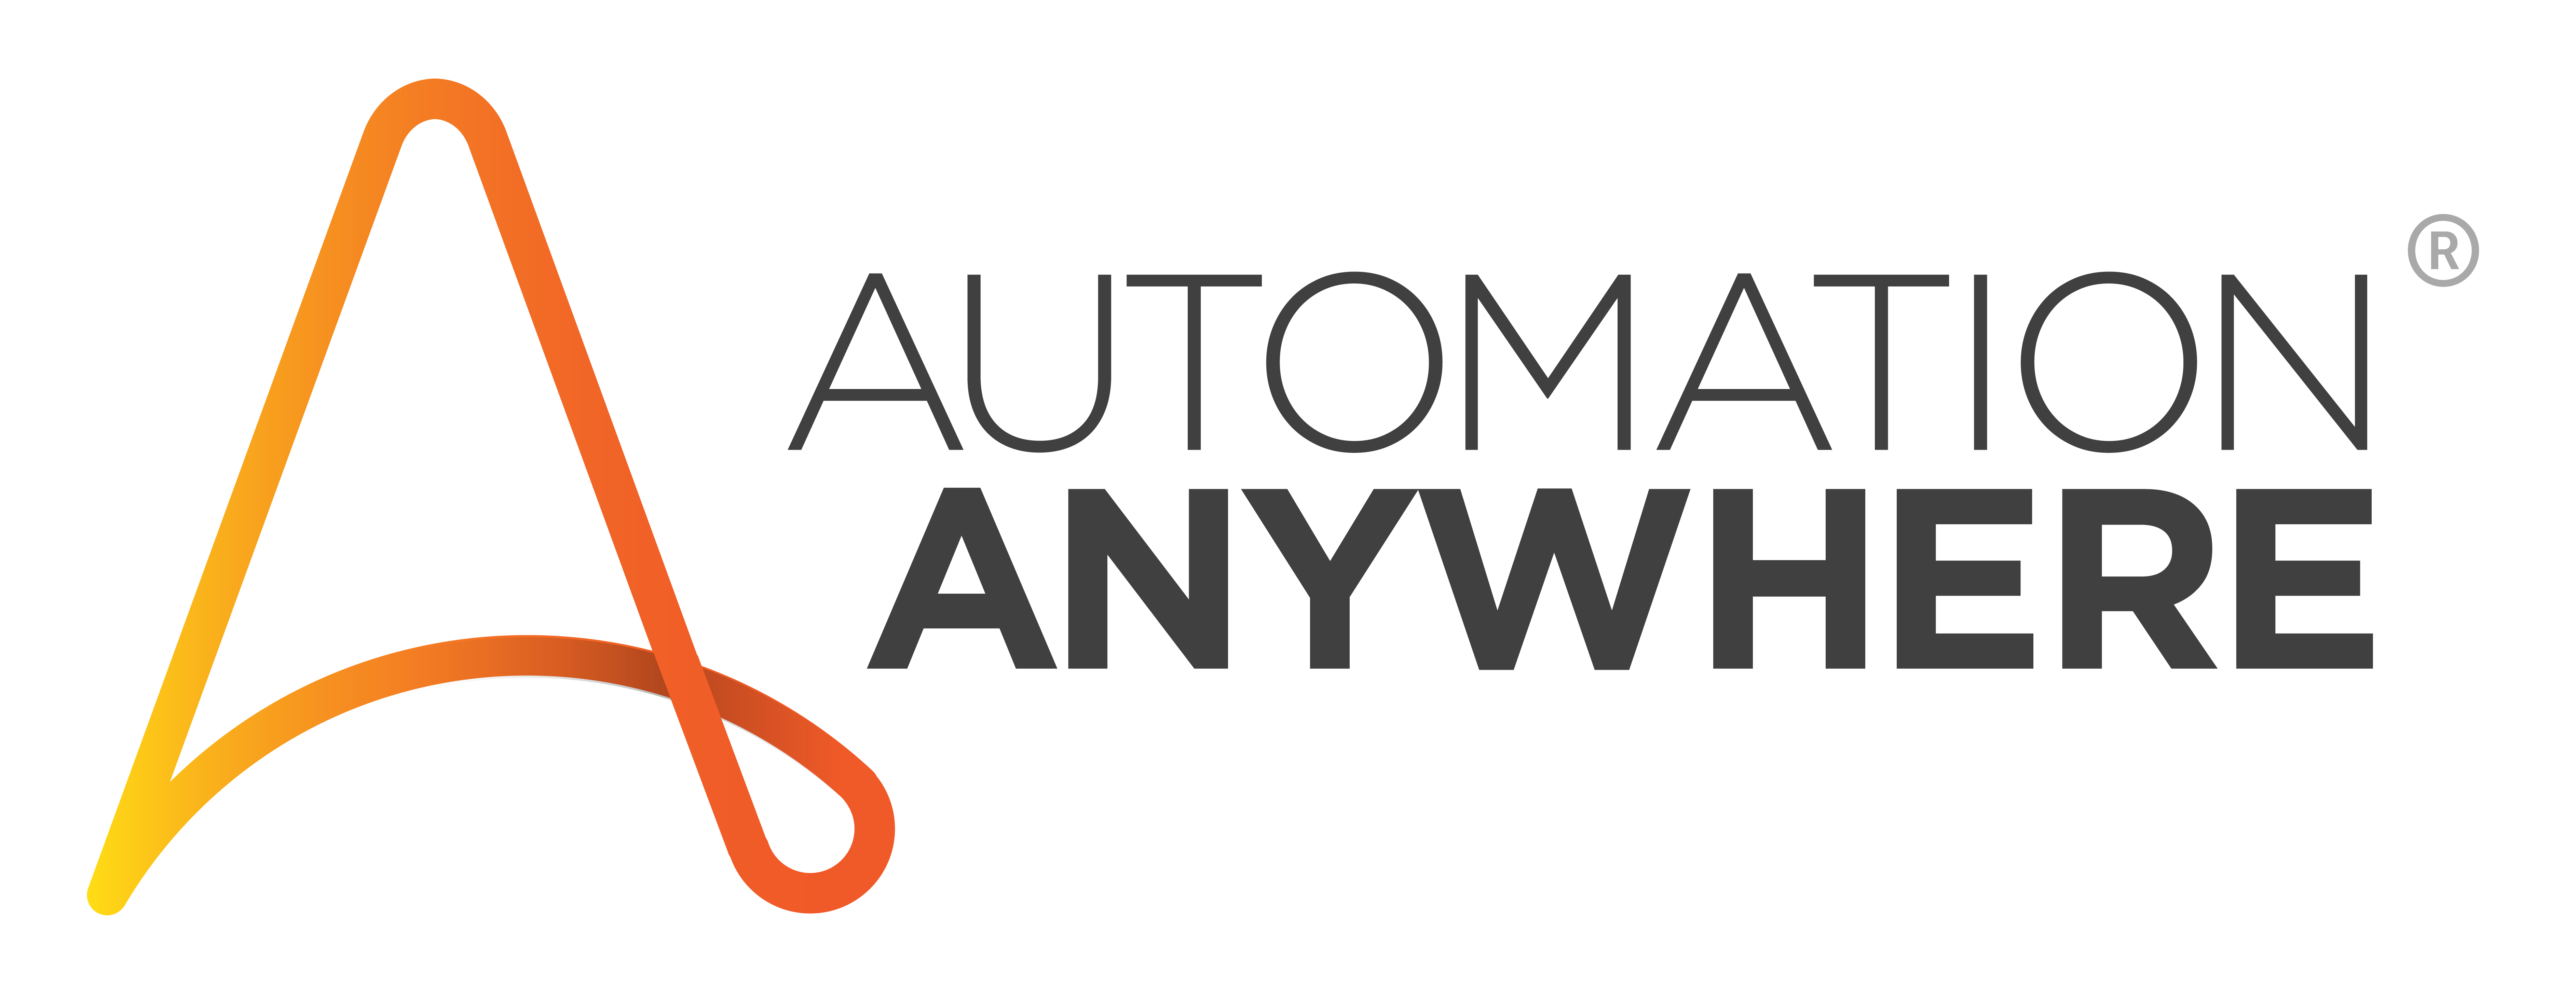 Automation Anywhere 徽标